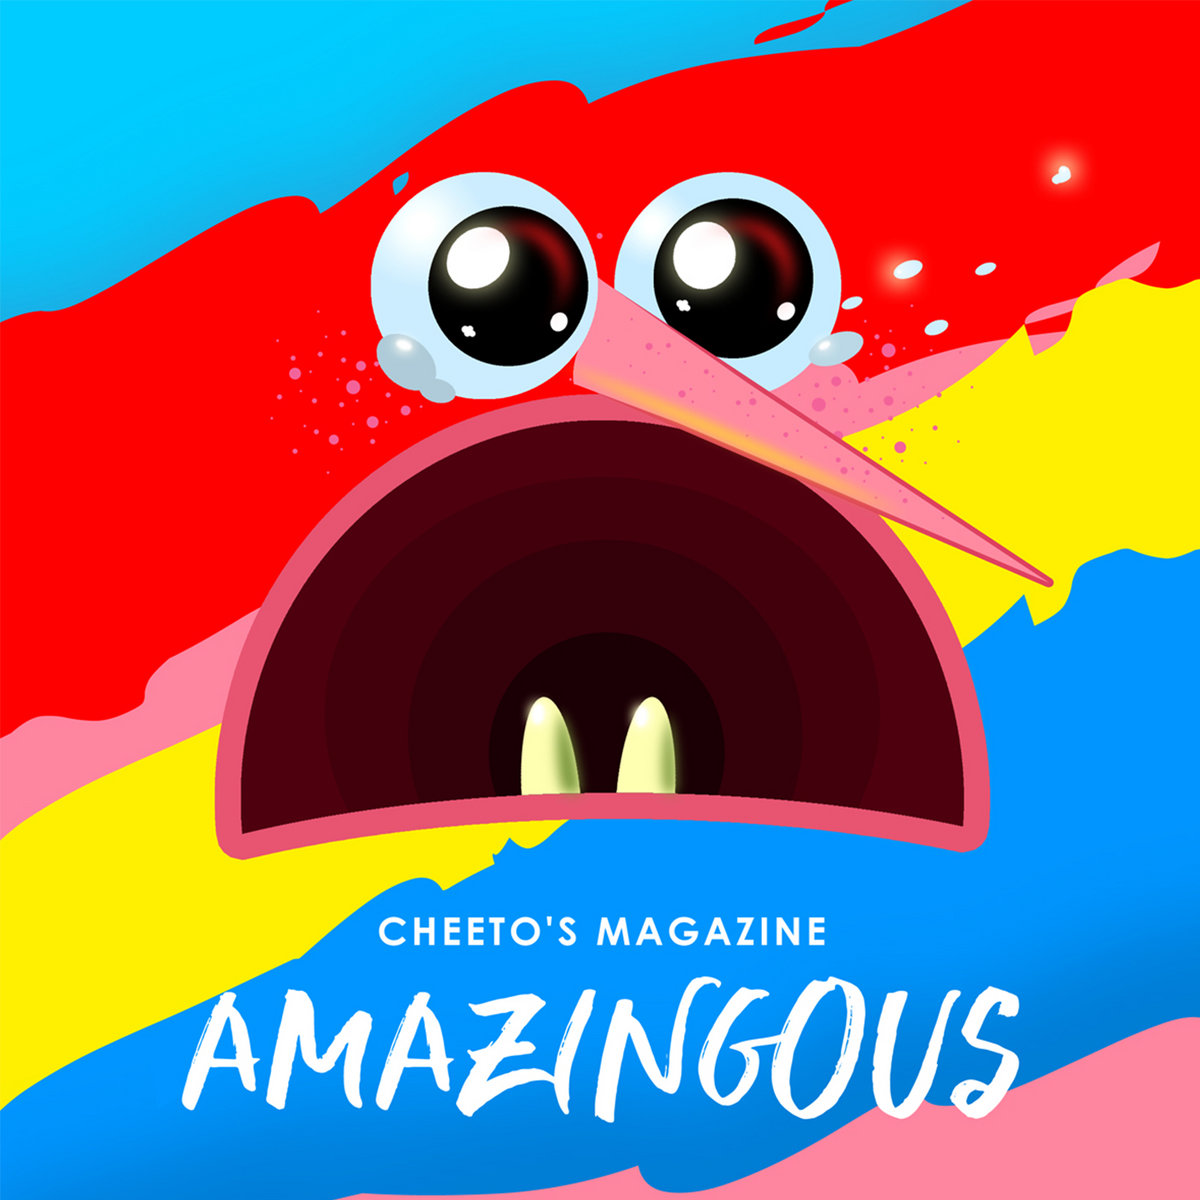 Cheeto's Magazine: Amazingous